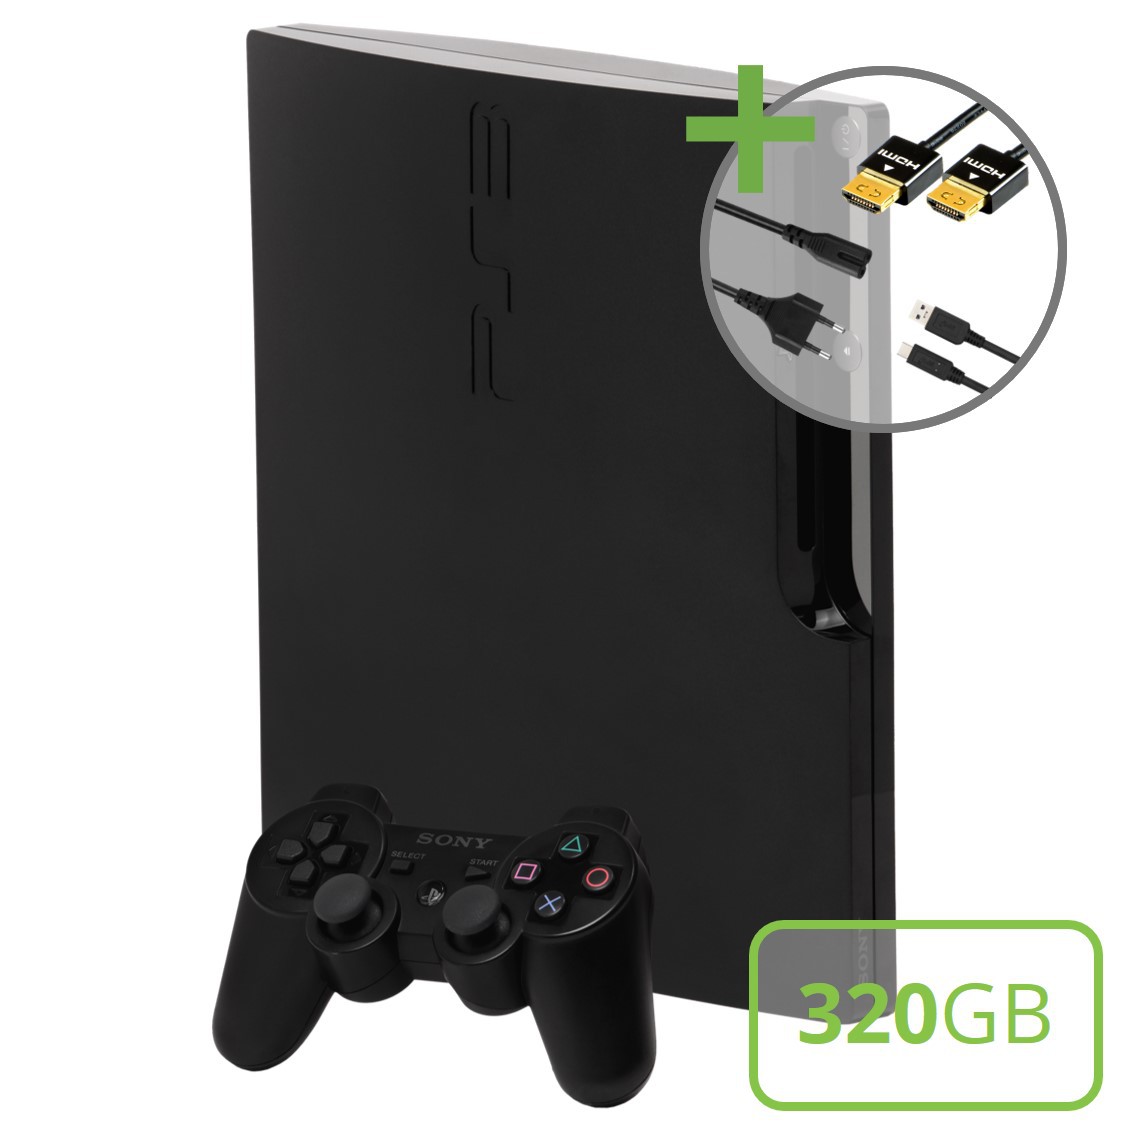 Sony PlayStation 3 Slim (320GB) Starter Pack - DualShock Edition - Playstation 3 Hardware - 2